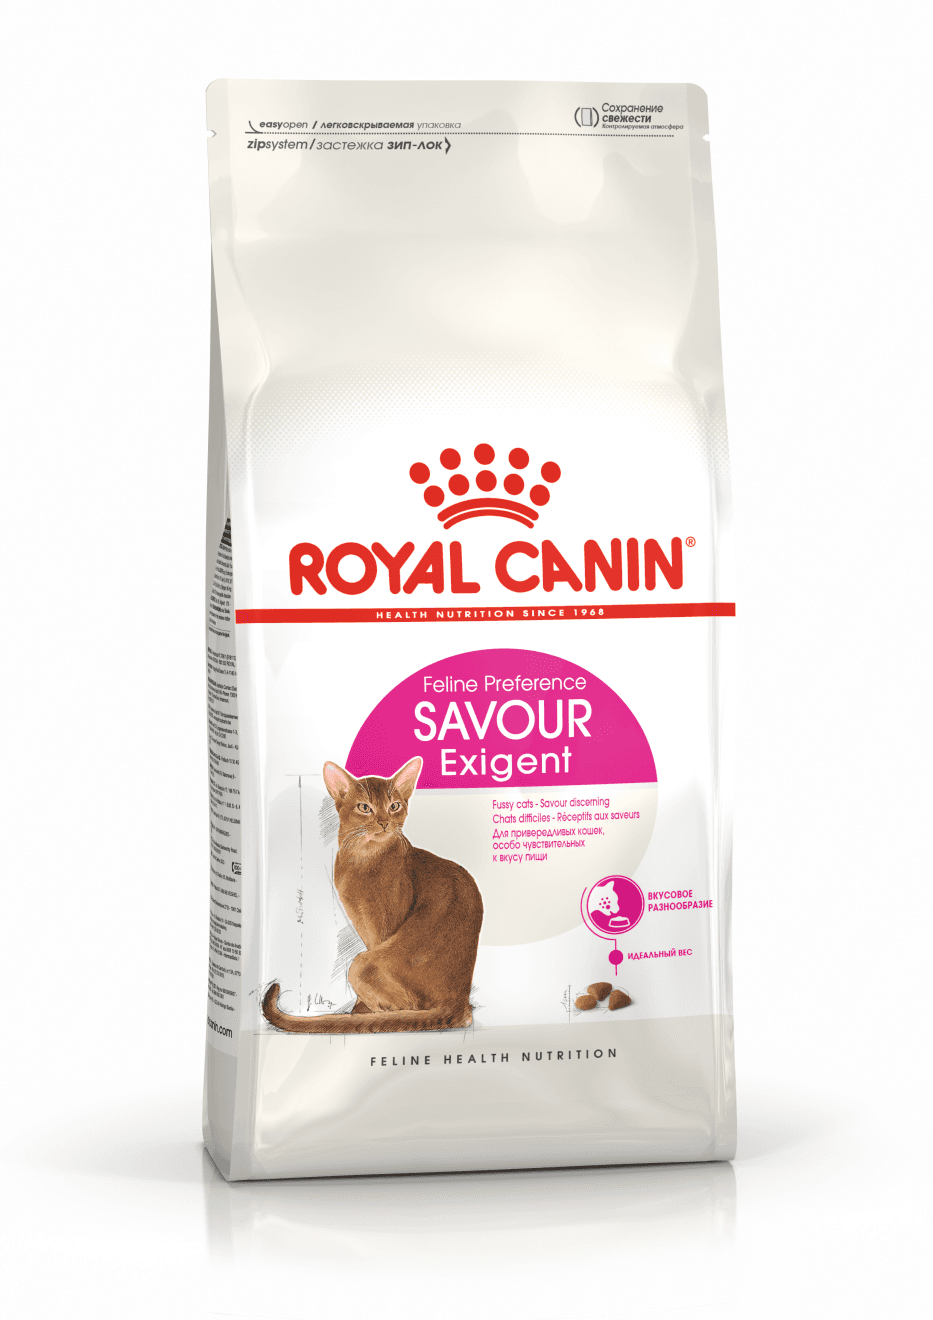 ROYAL CANIN Suva hrana za mačke Exigent savour sensation 2kg